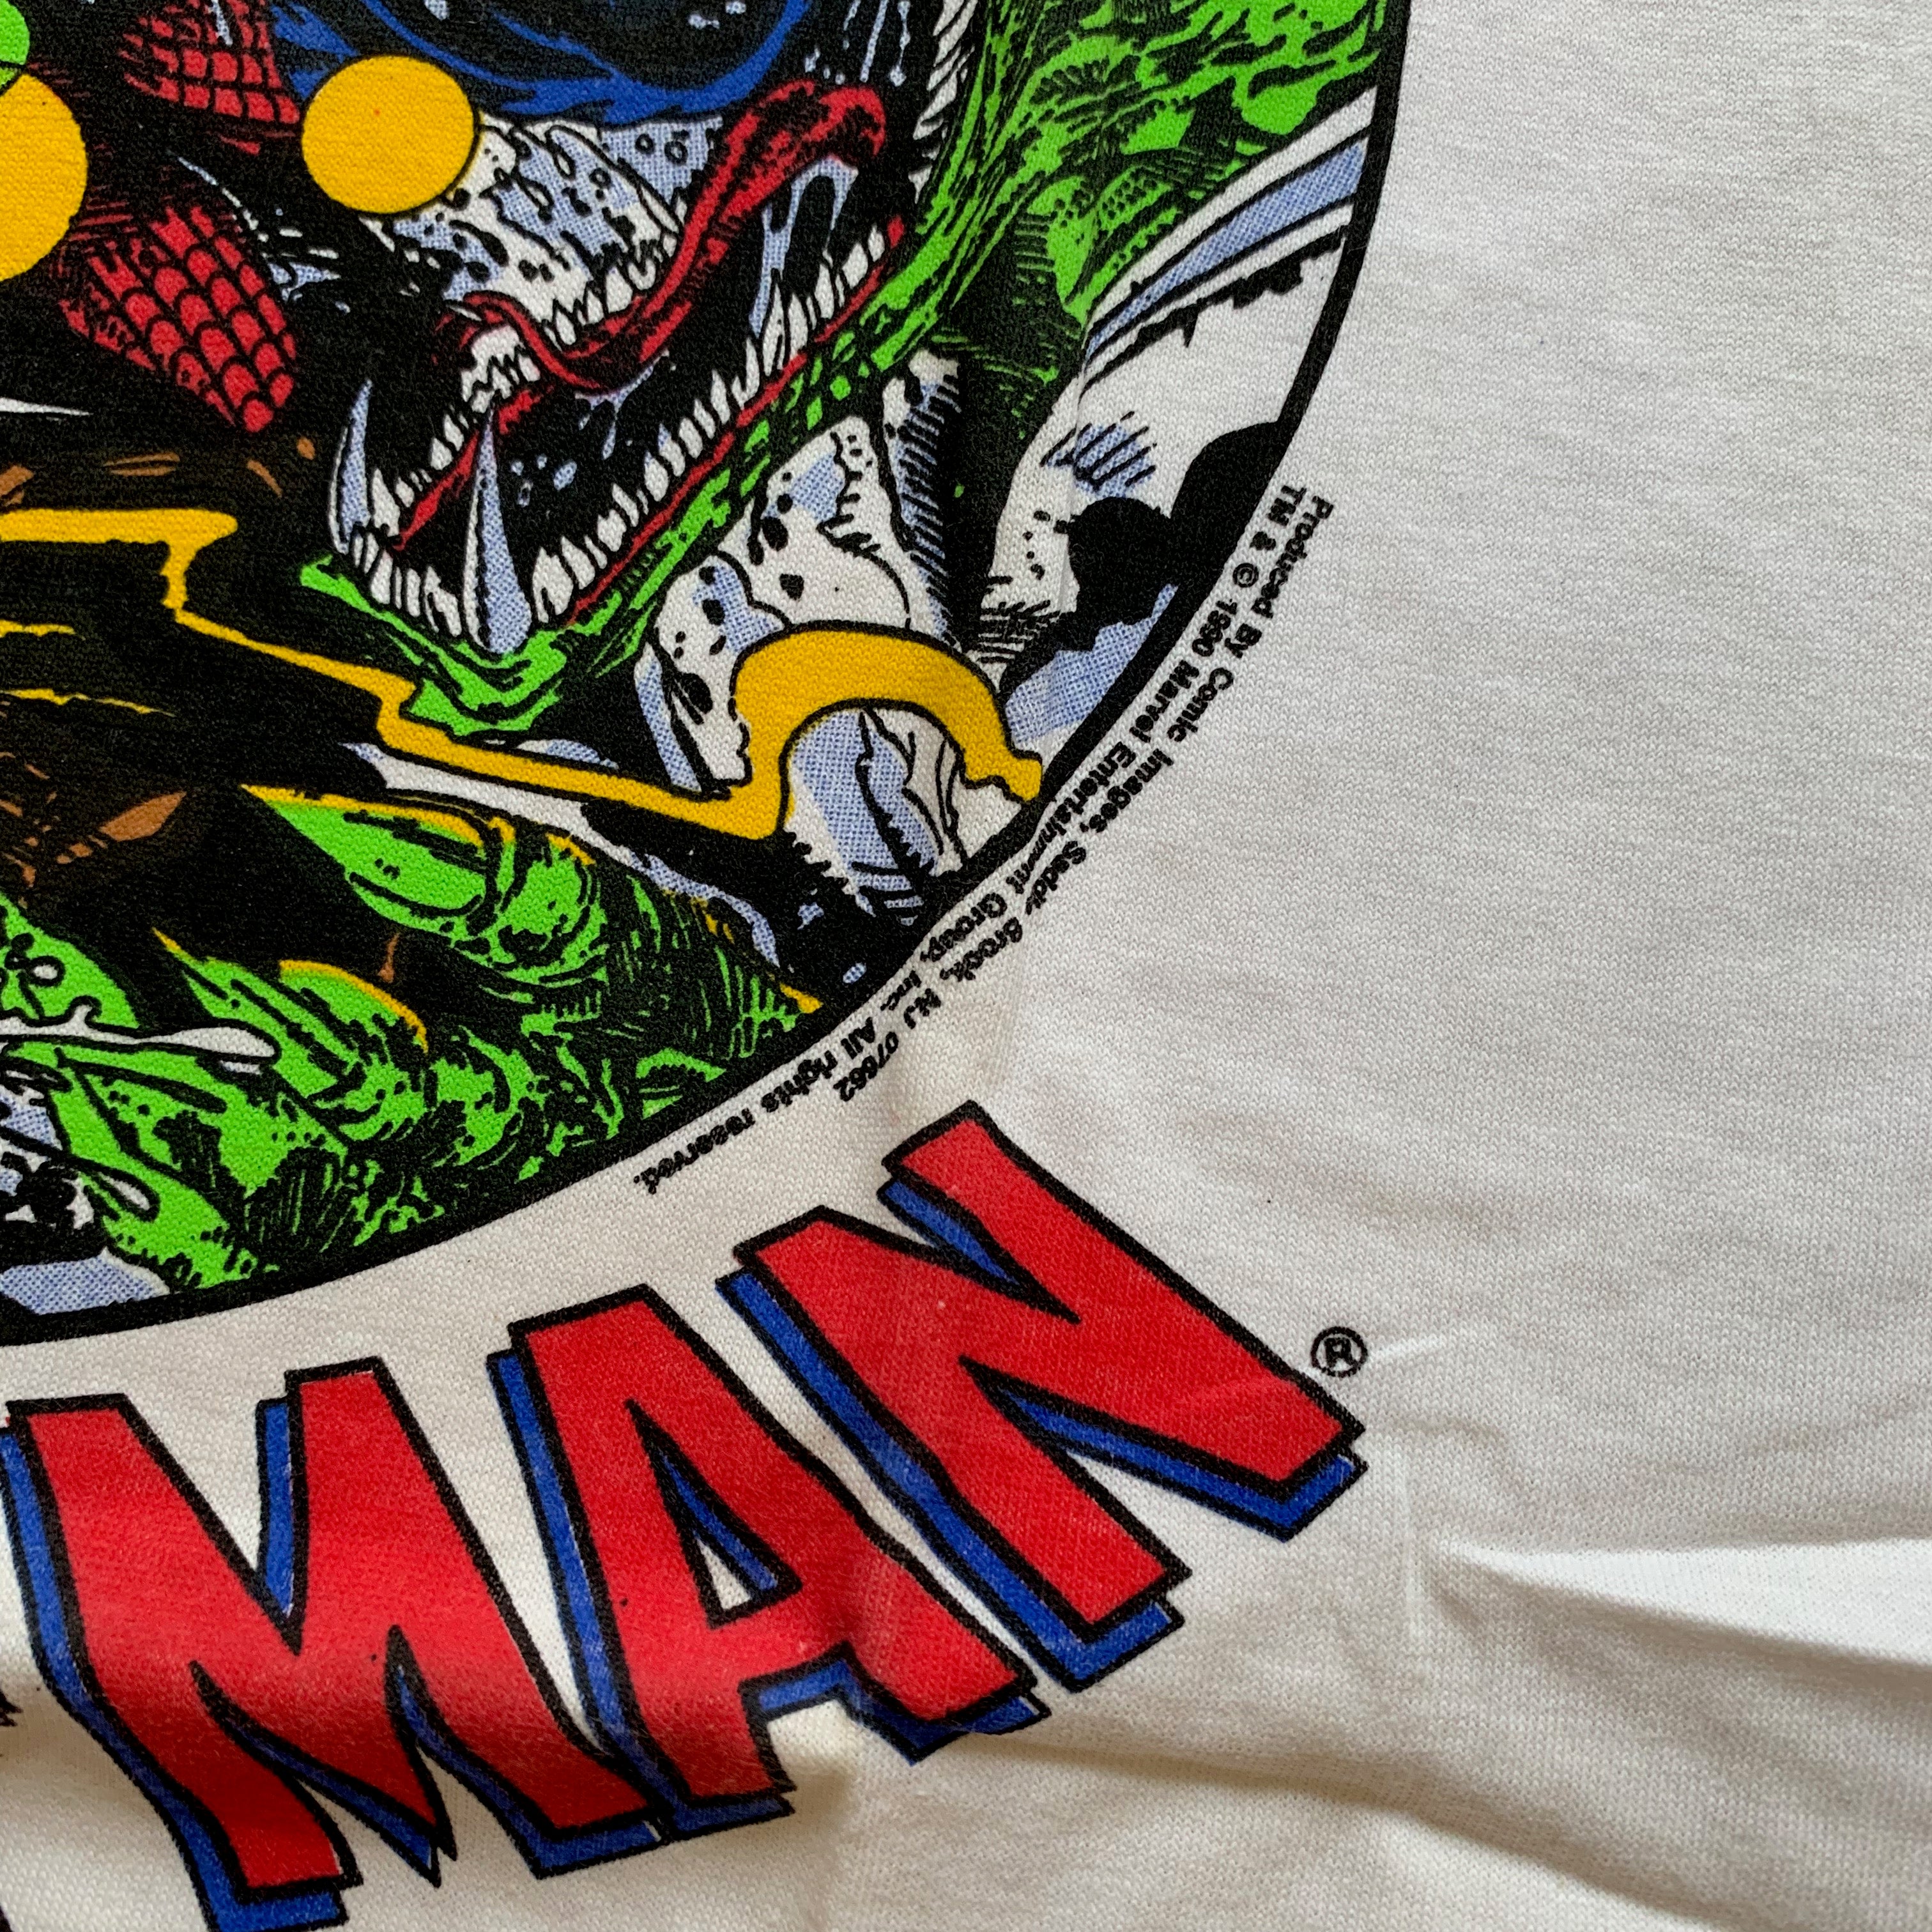 Vintage Deadstock 1990 Spiderman T-Shirt - XL